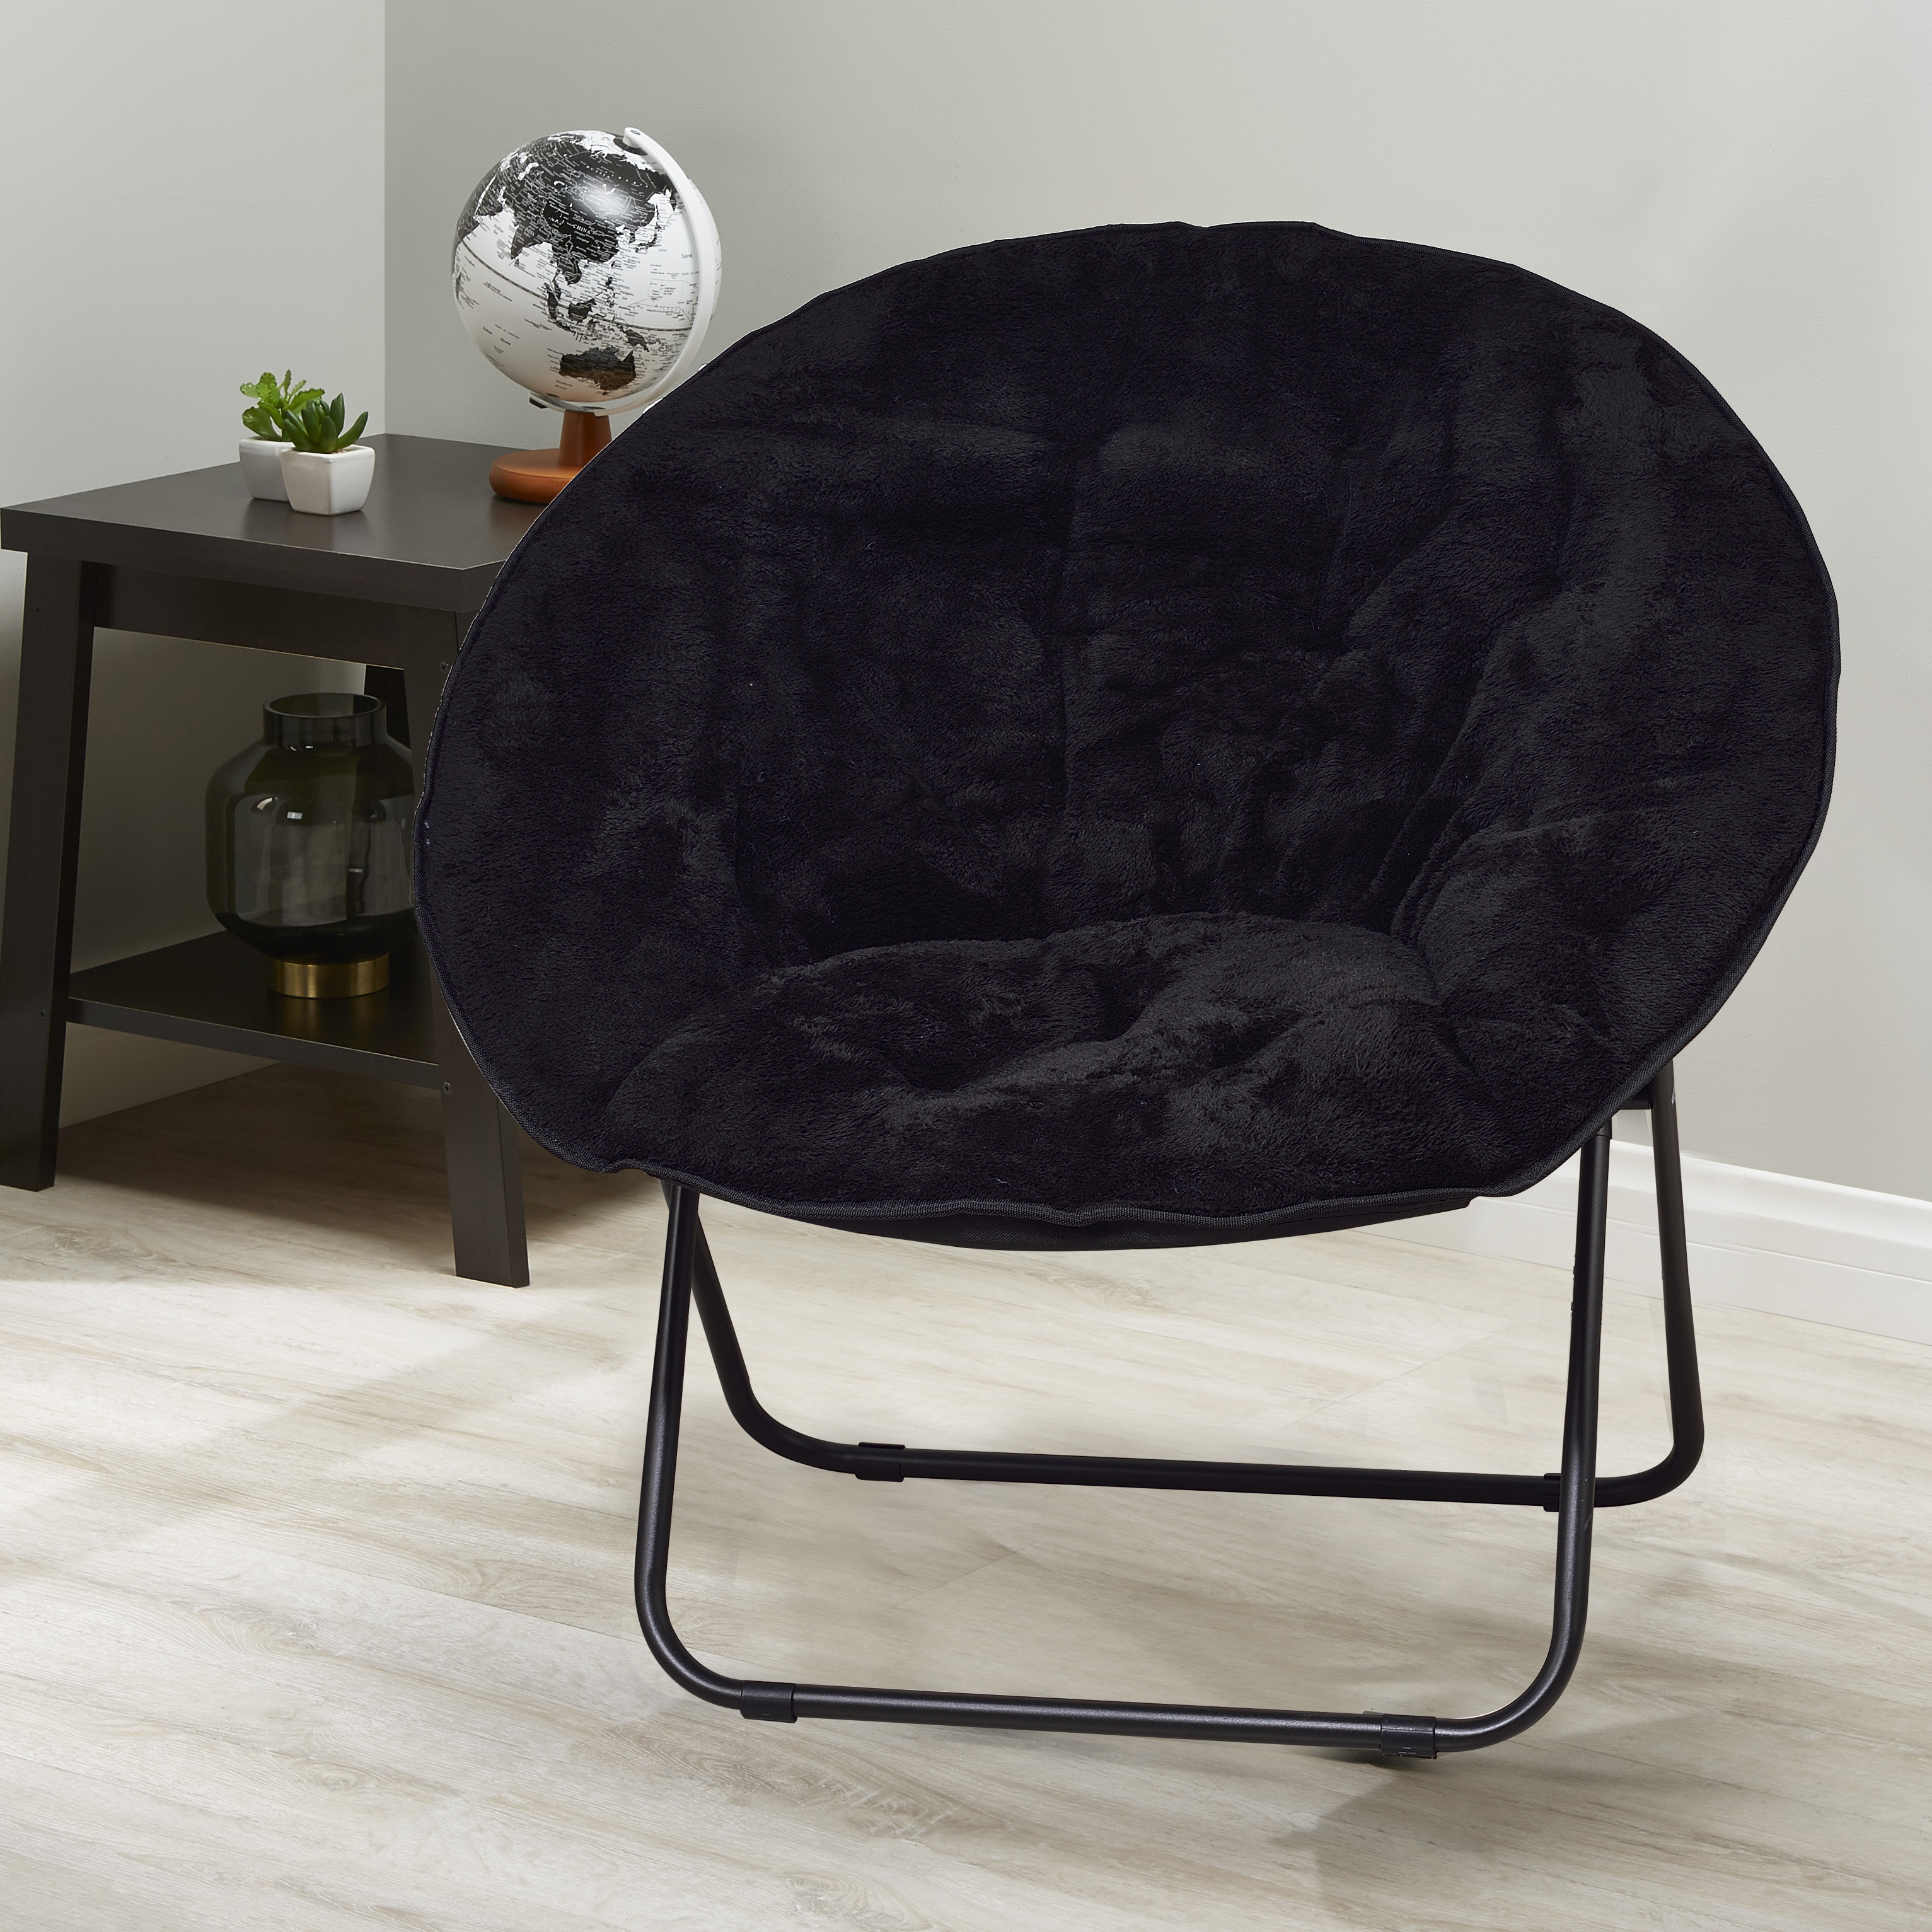 Buy Mainstays Folding Plush Saucer Chair